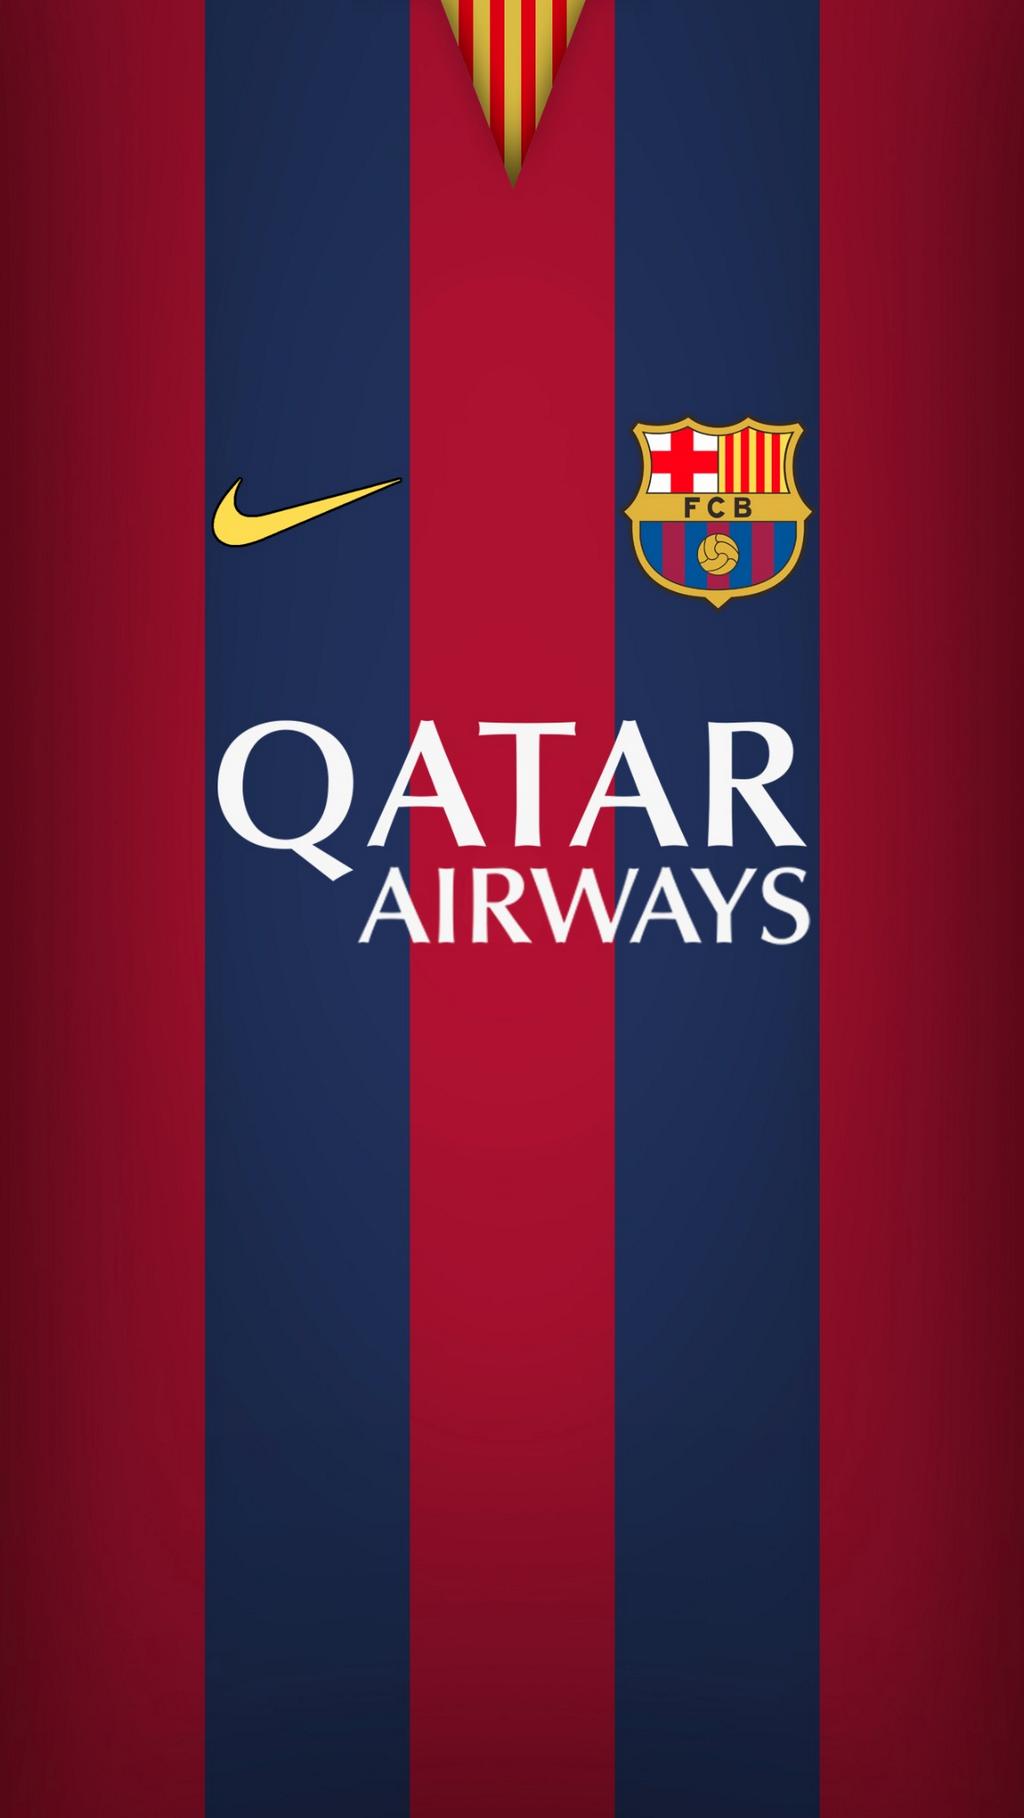 Download Fc Barcelona Logo Wallpaper